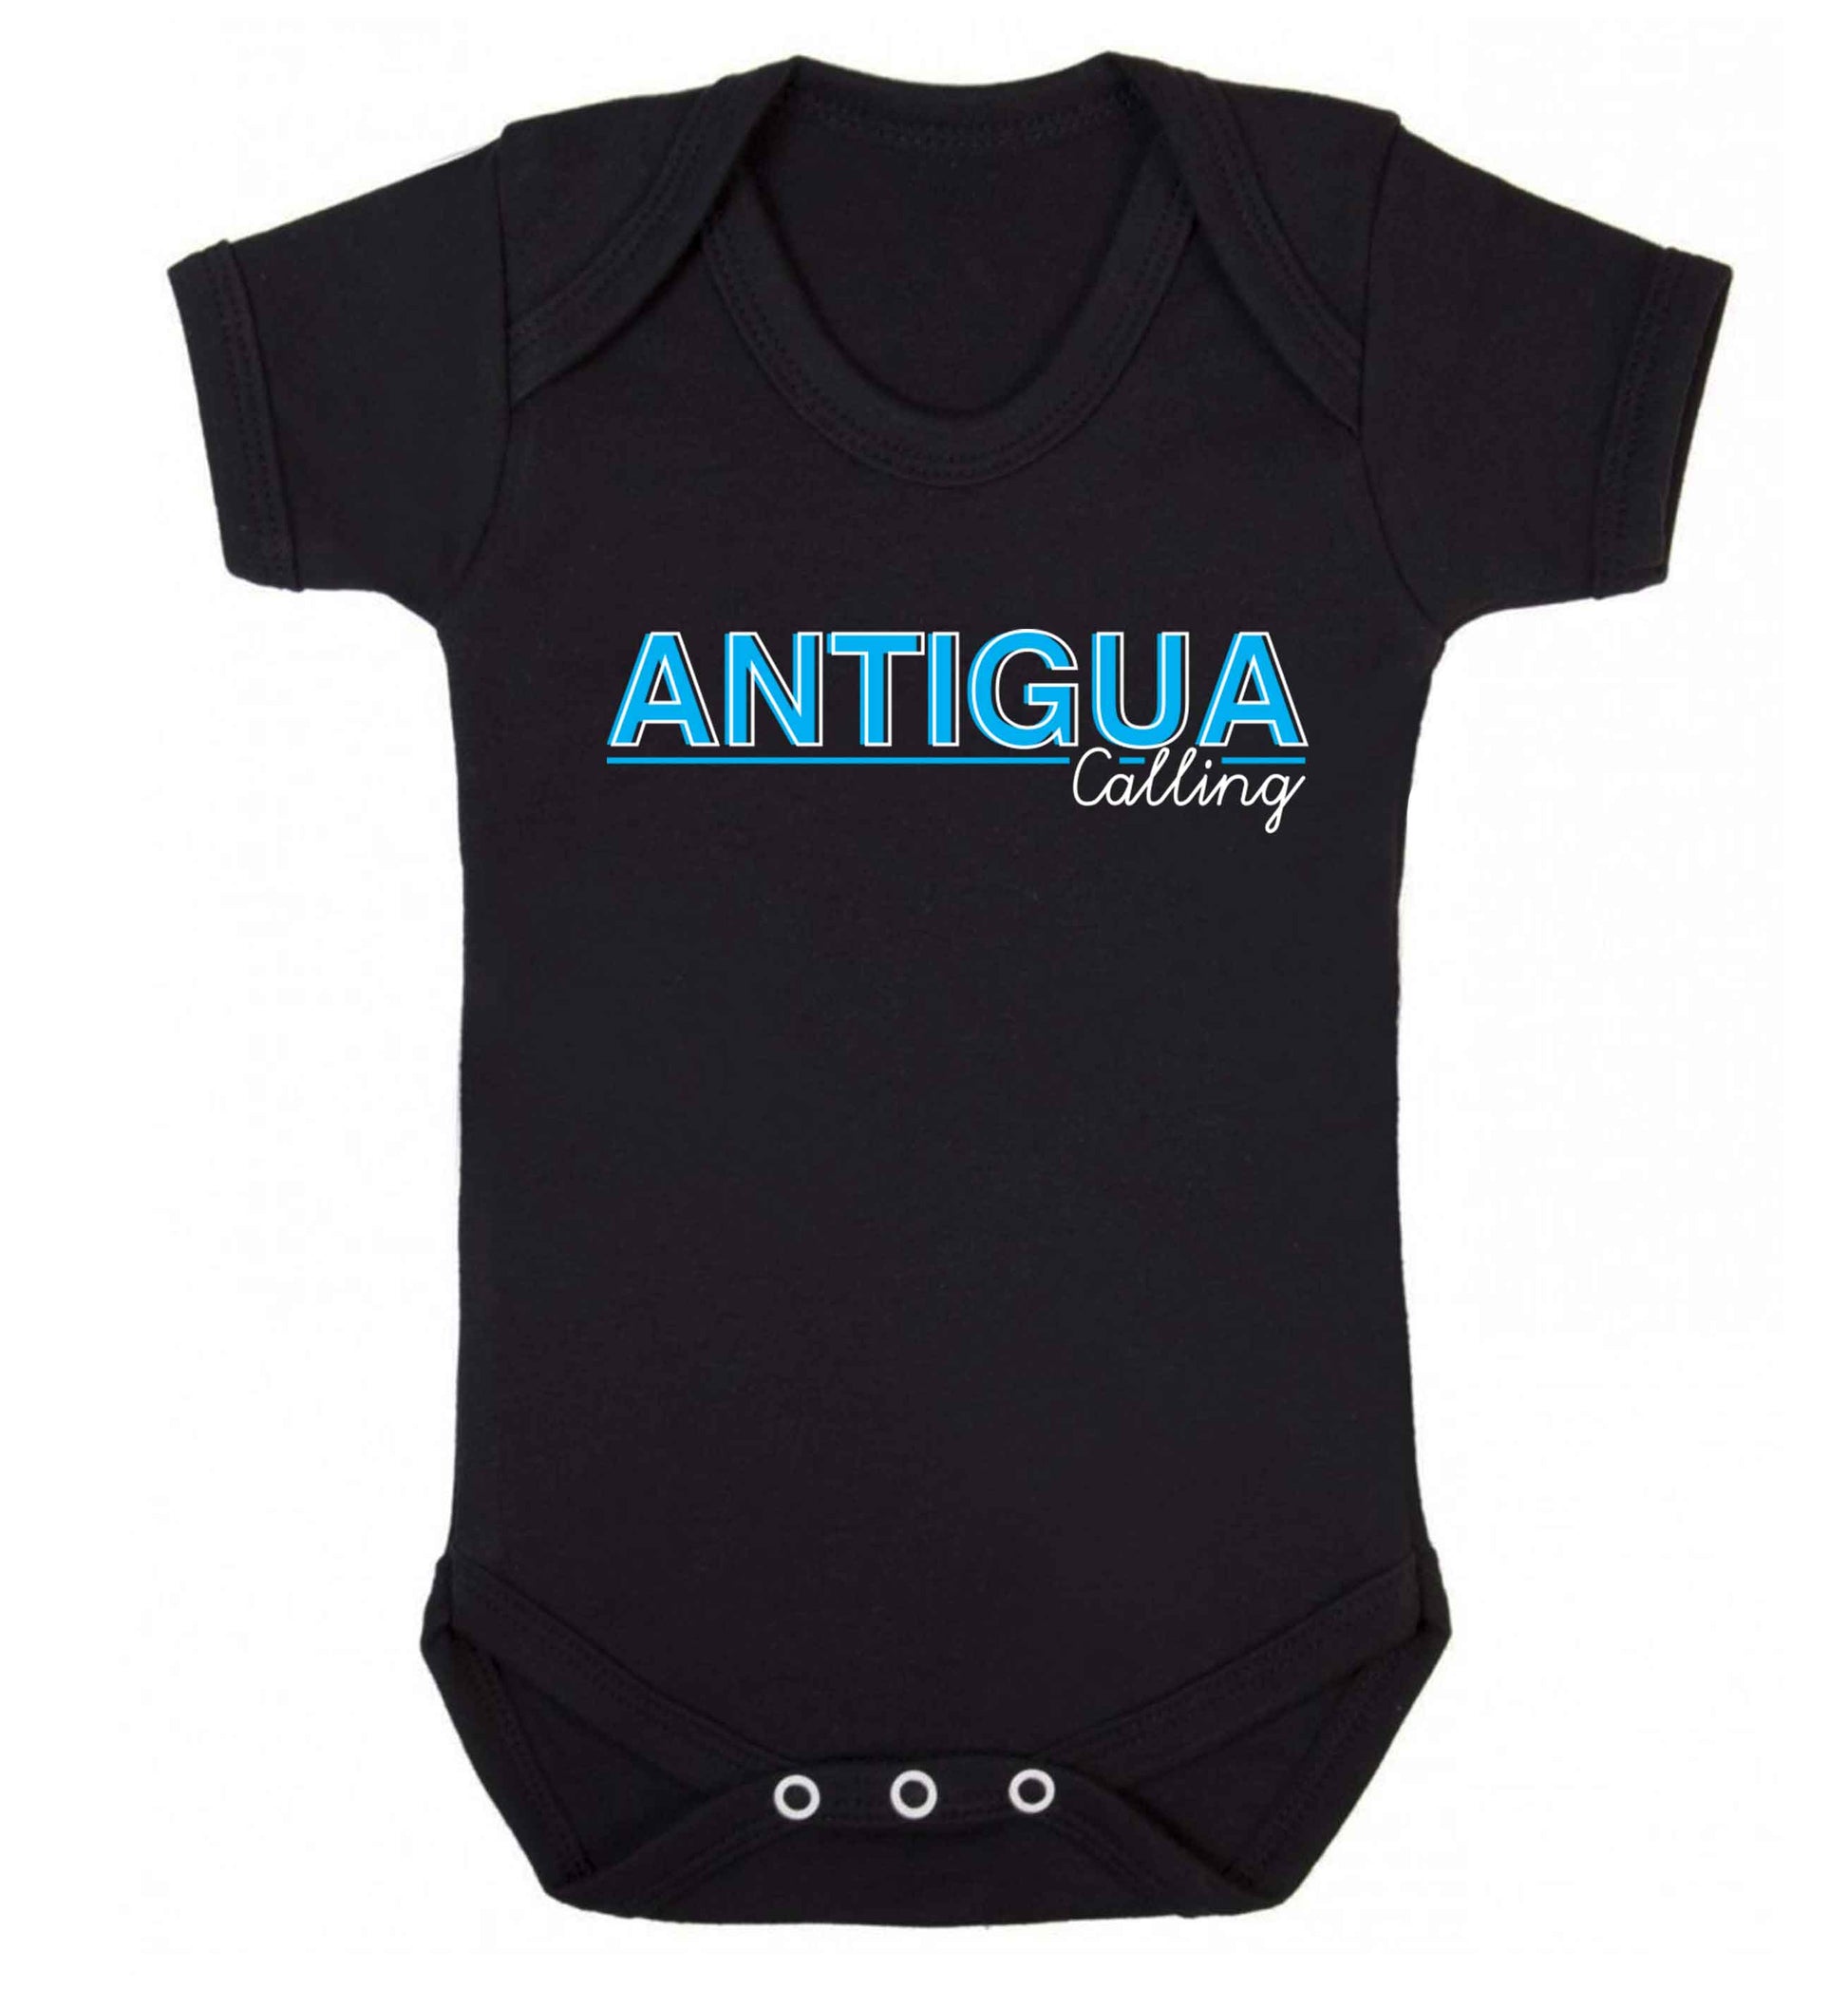 Antigua calling Baby Vest black 18-24 months